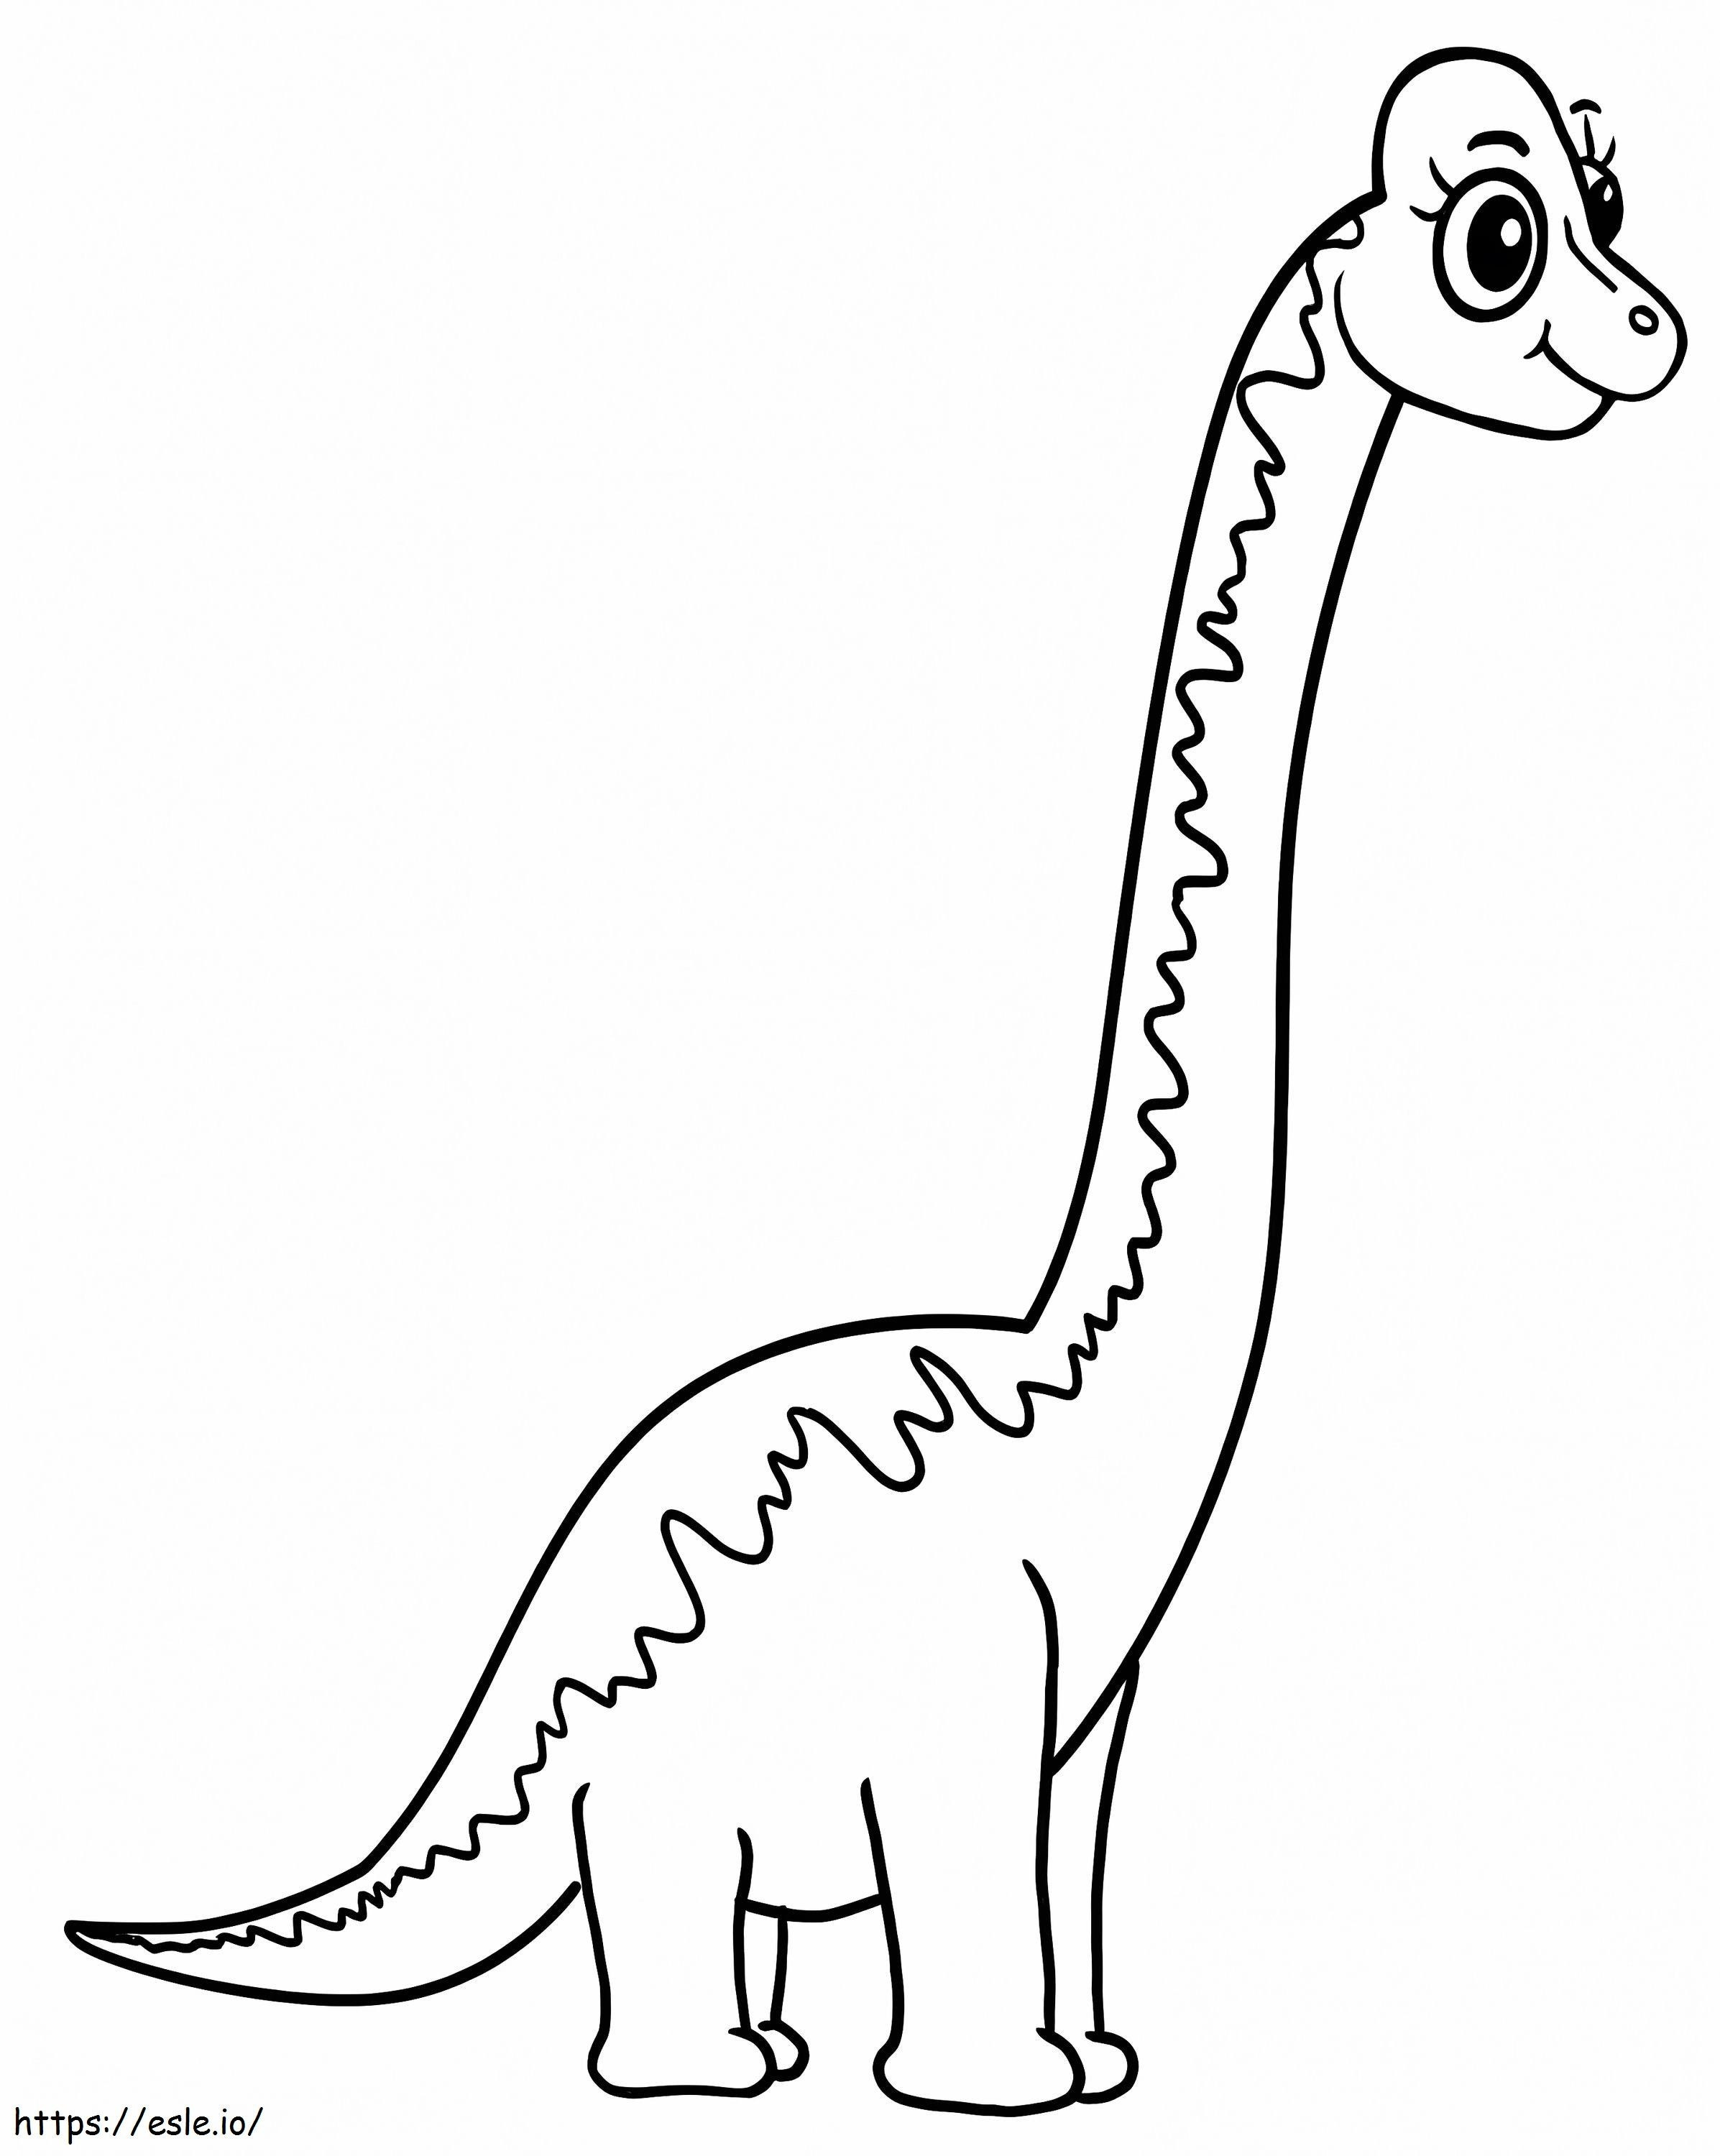 Cute Brachiosaurus coloring page